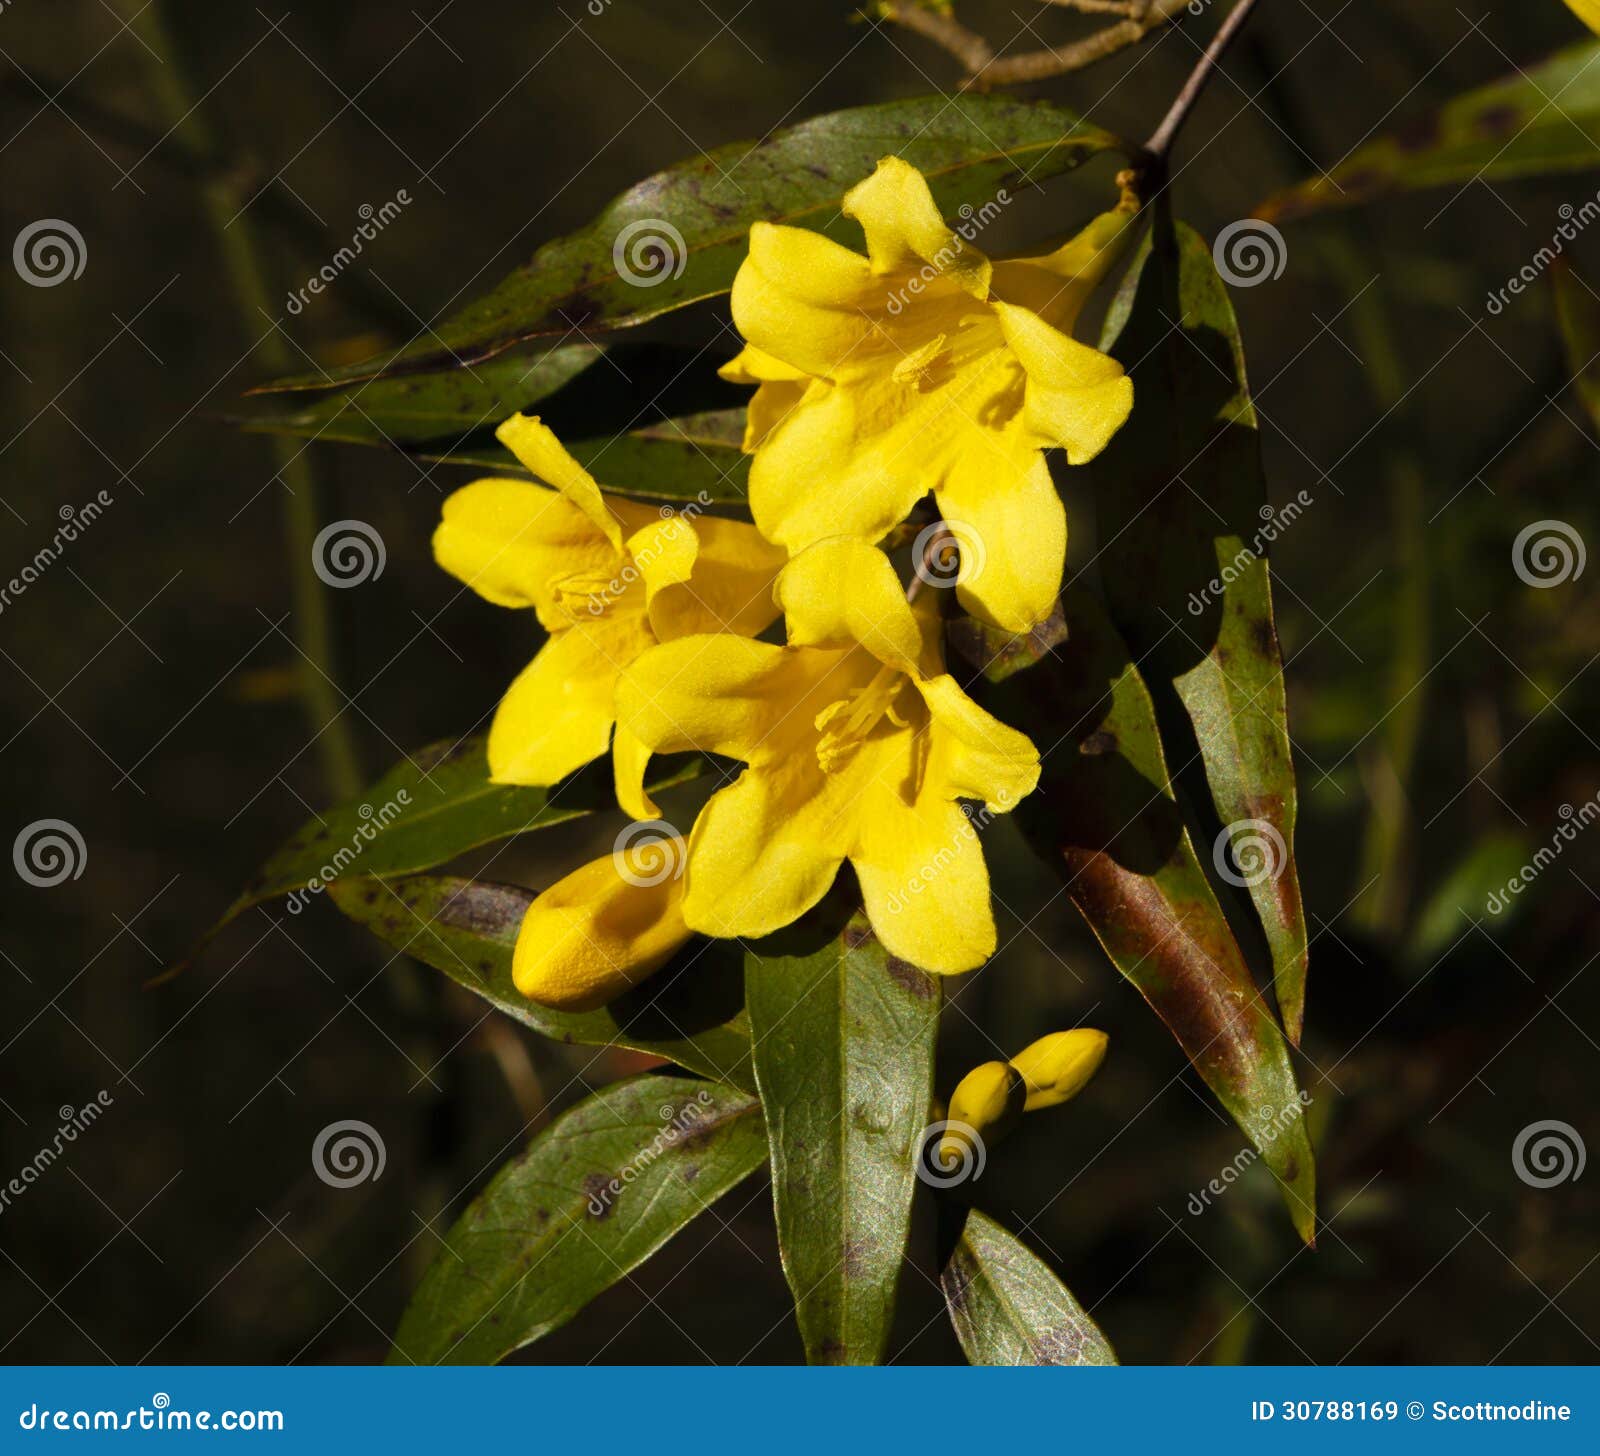 Carolina Yellow Jasmine Flowers Stock Image Image Of Sempervirens Sunny 30788169